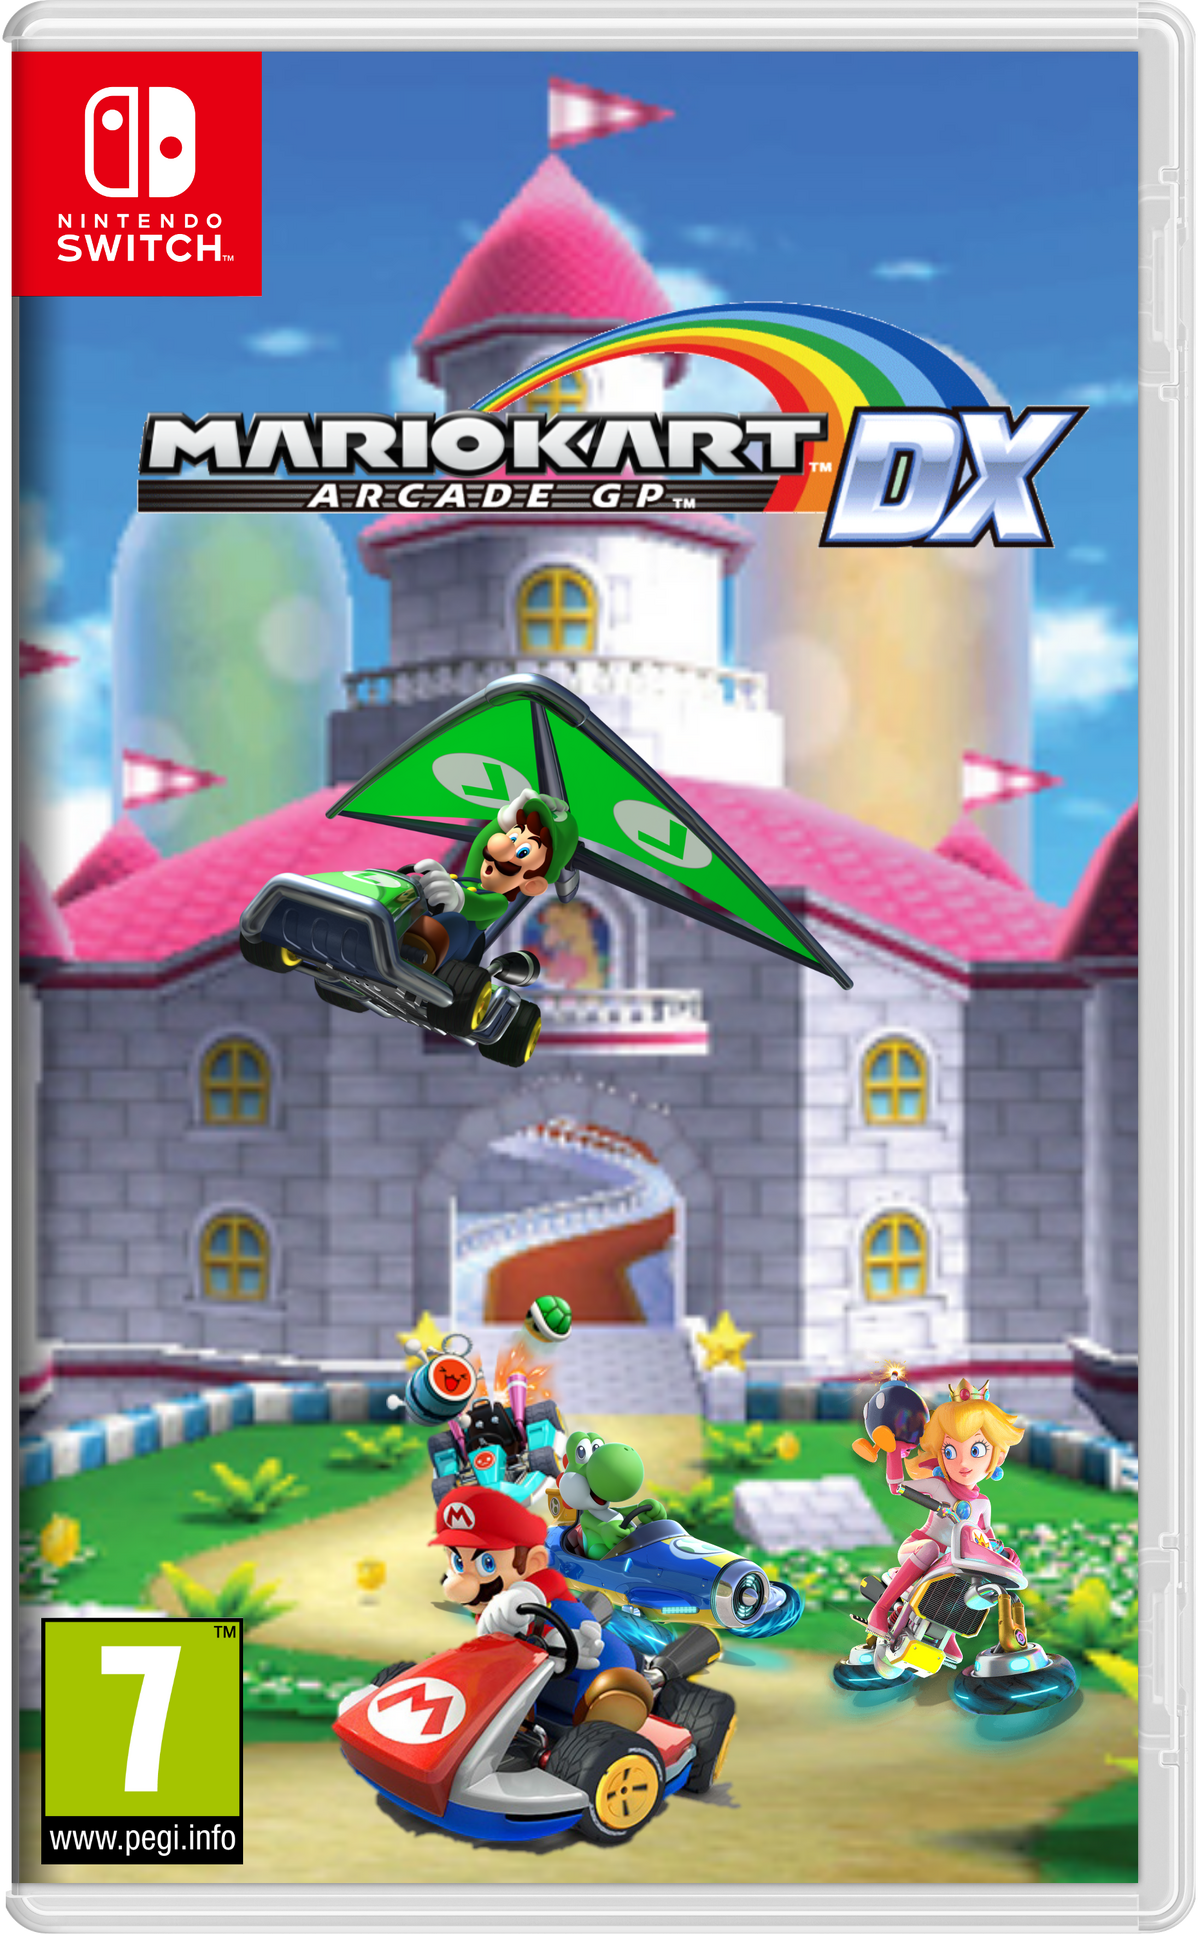 Mario kart Arcade Gp Dx (Nintendo Switch), Fantendo - Game Ideas & More